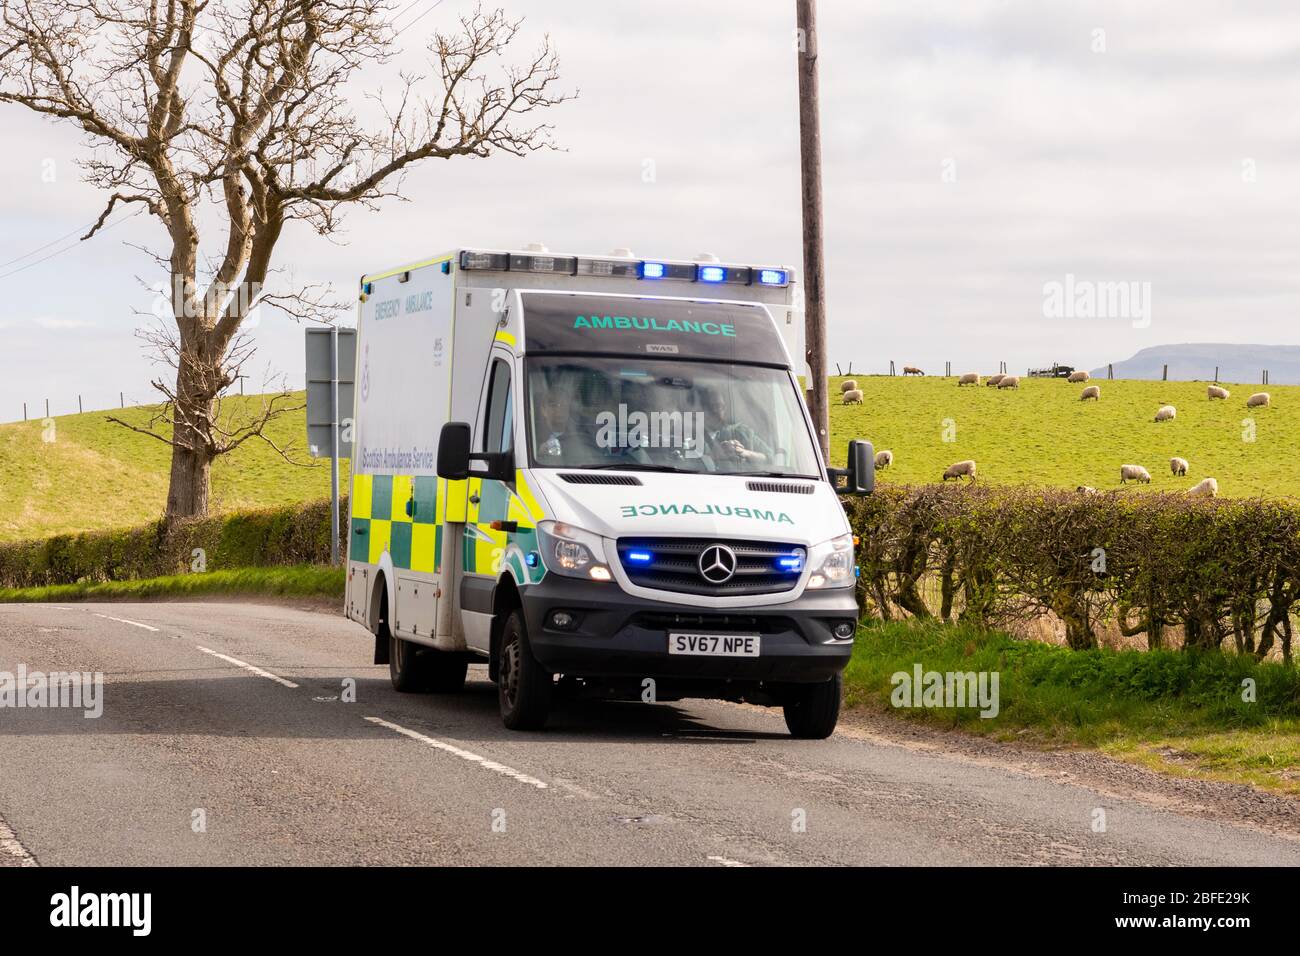 Scottish Ambulance with blue flashing lights responding to emergency call during coronavirus pandemic lockdown in rural Stirlingshire, Scotland, UK Stock Photo